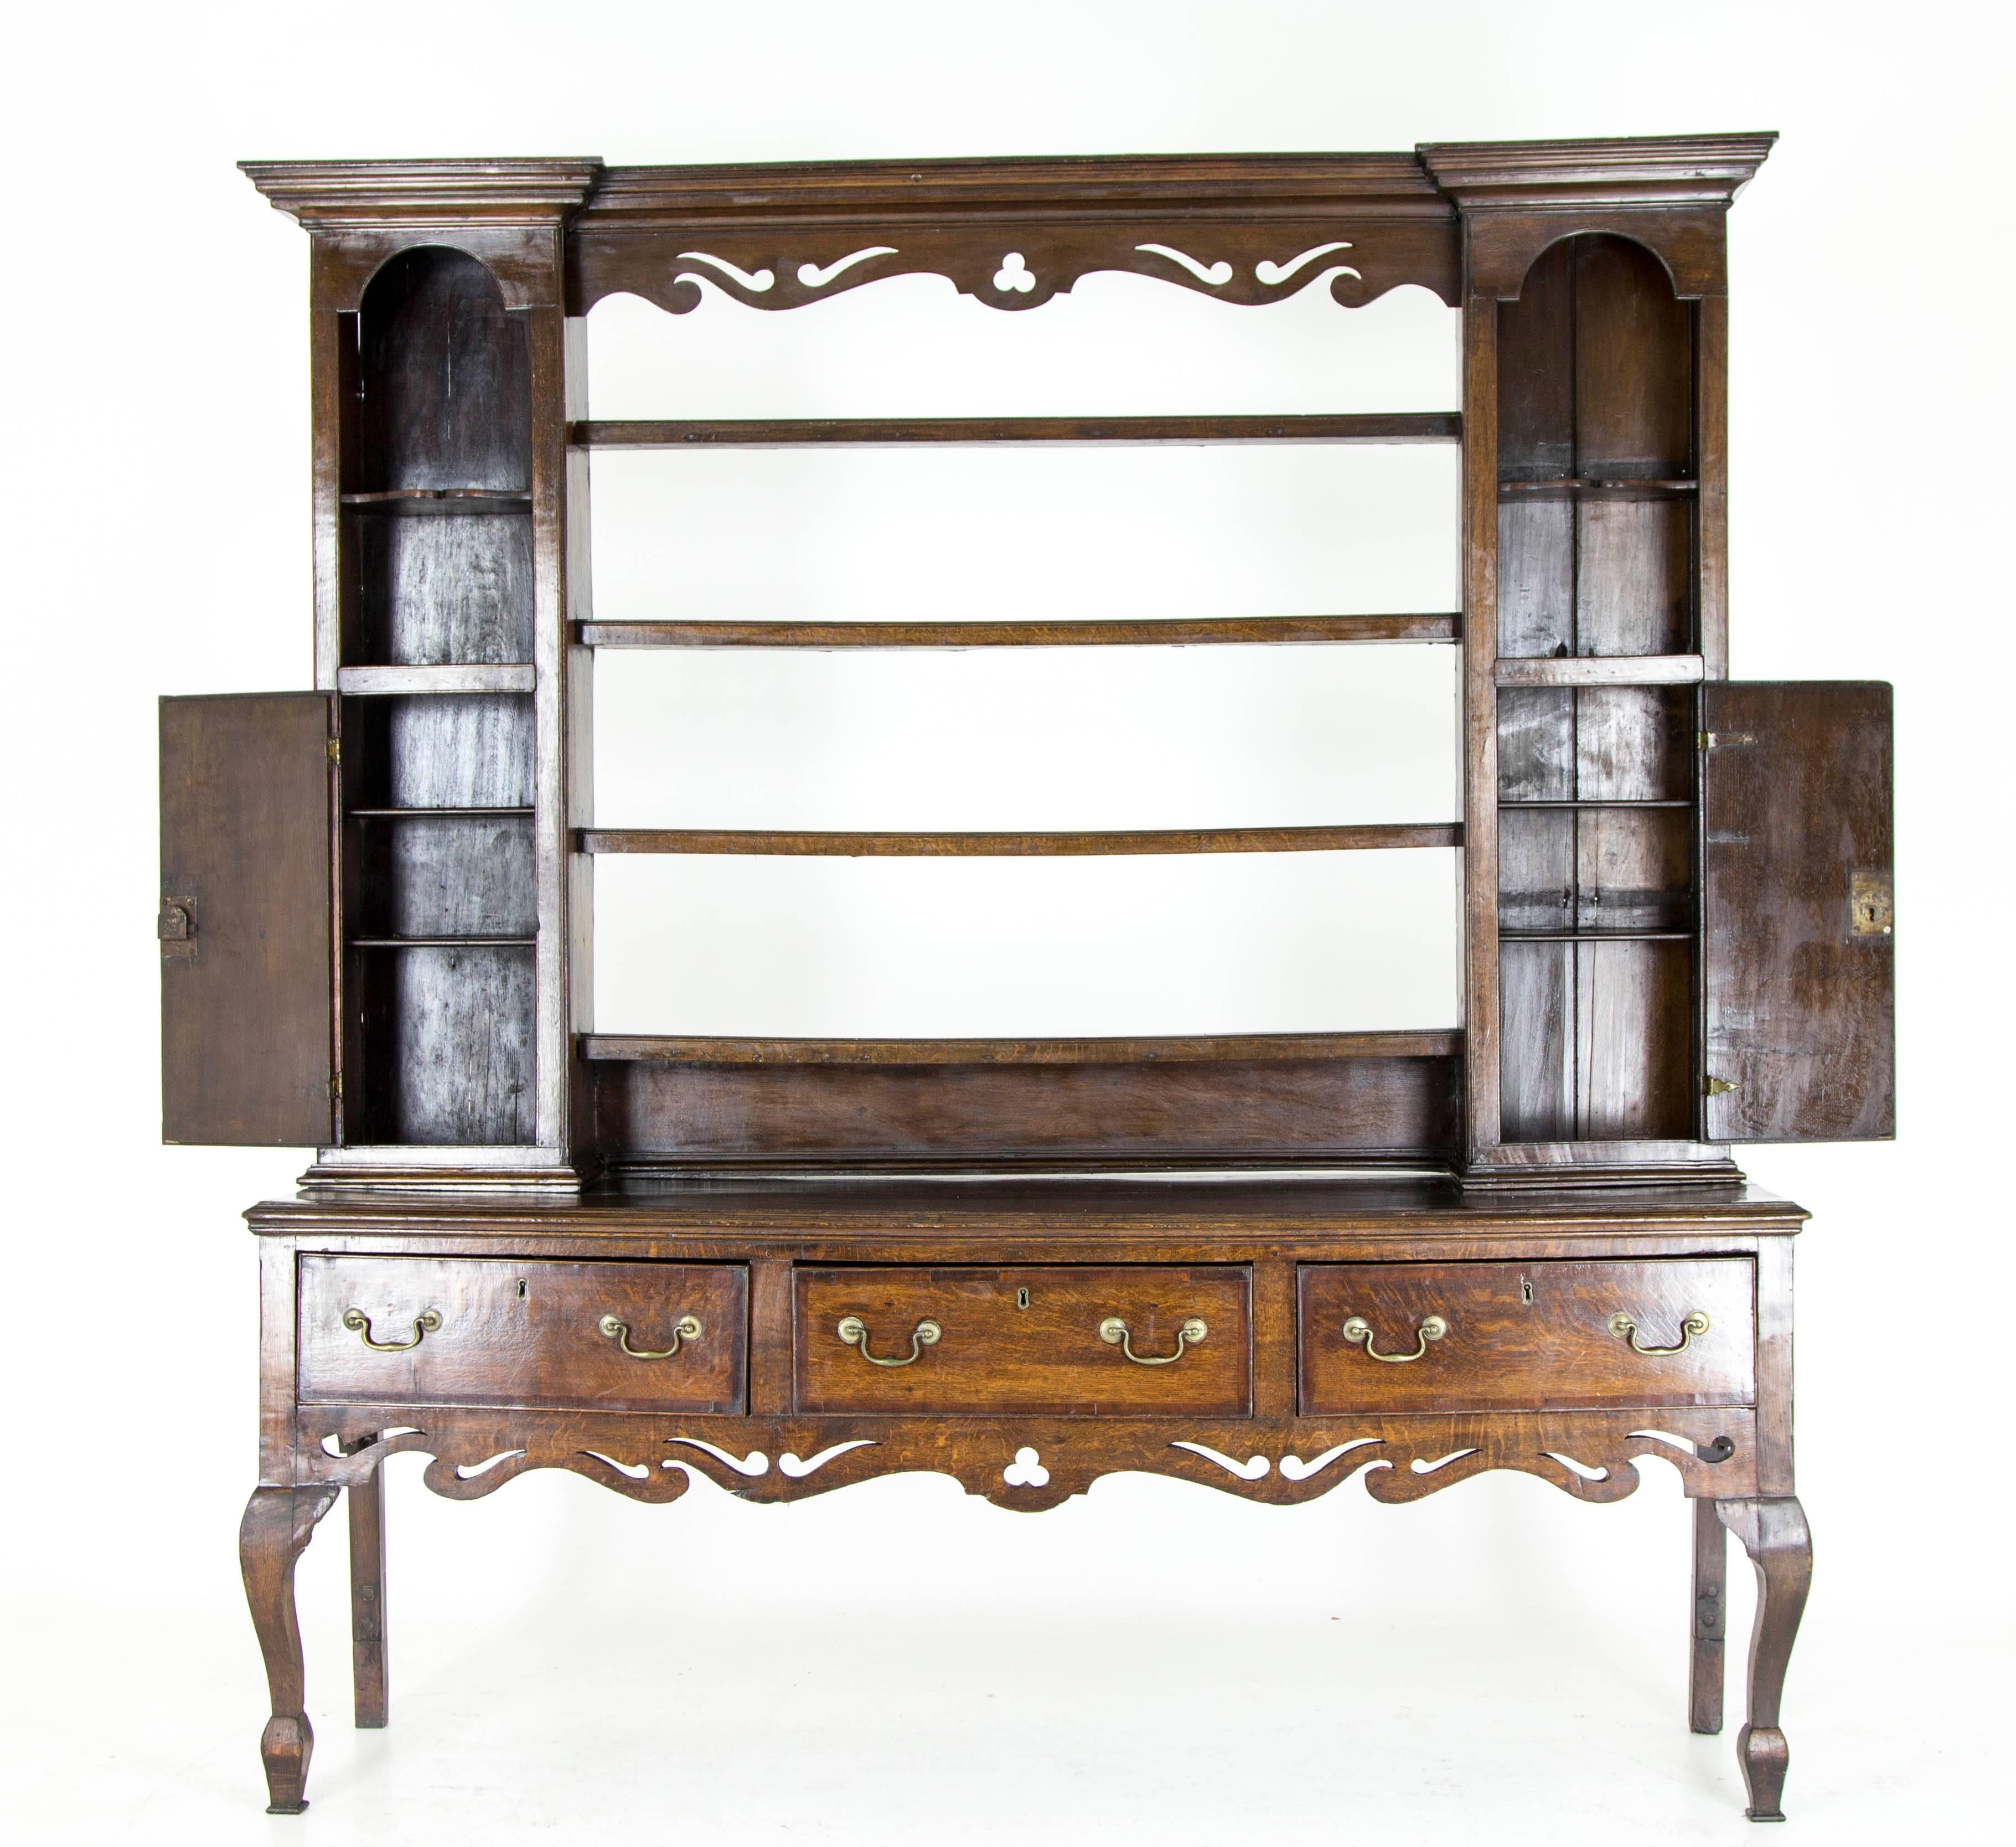 B613 Antique English 18th Century Oak Welsh Dresser with Three-Shelve Plate Rack 5